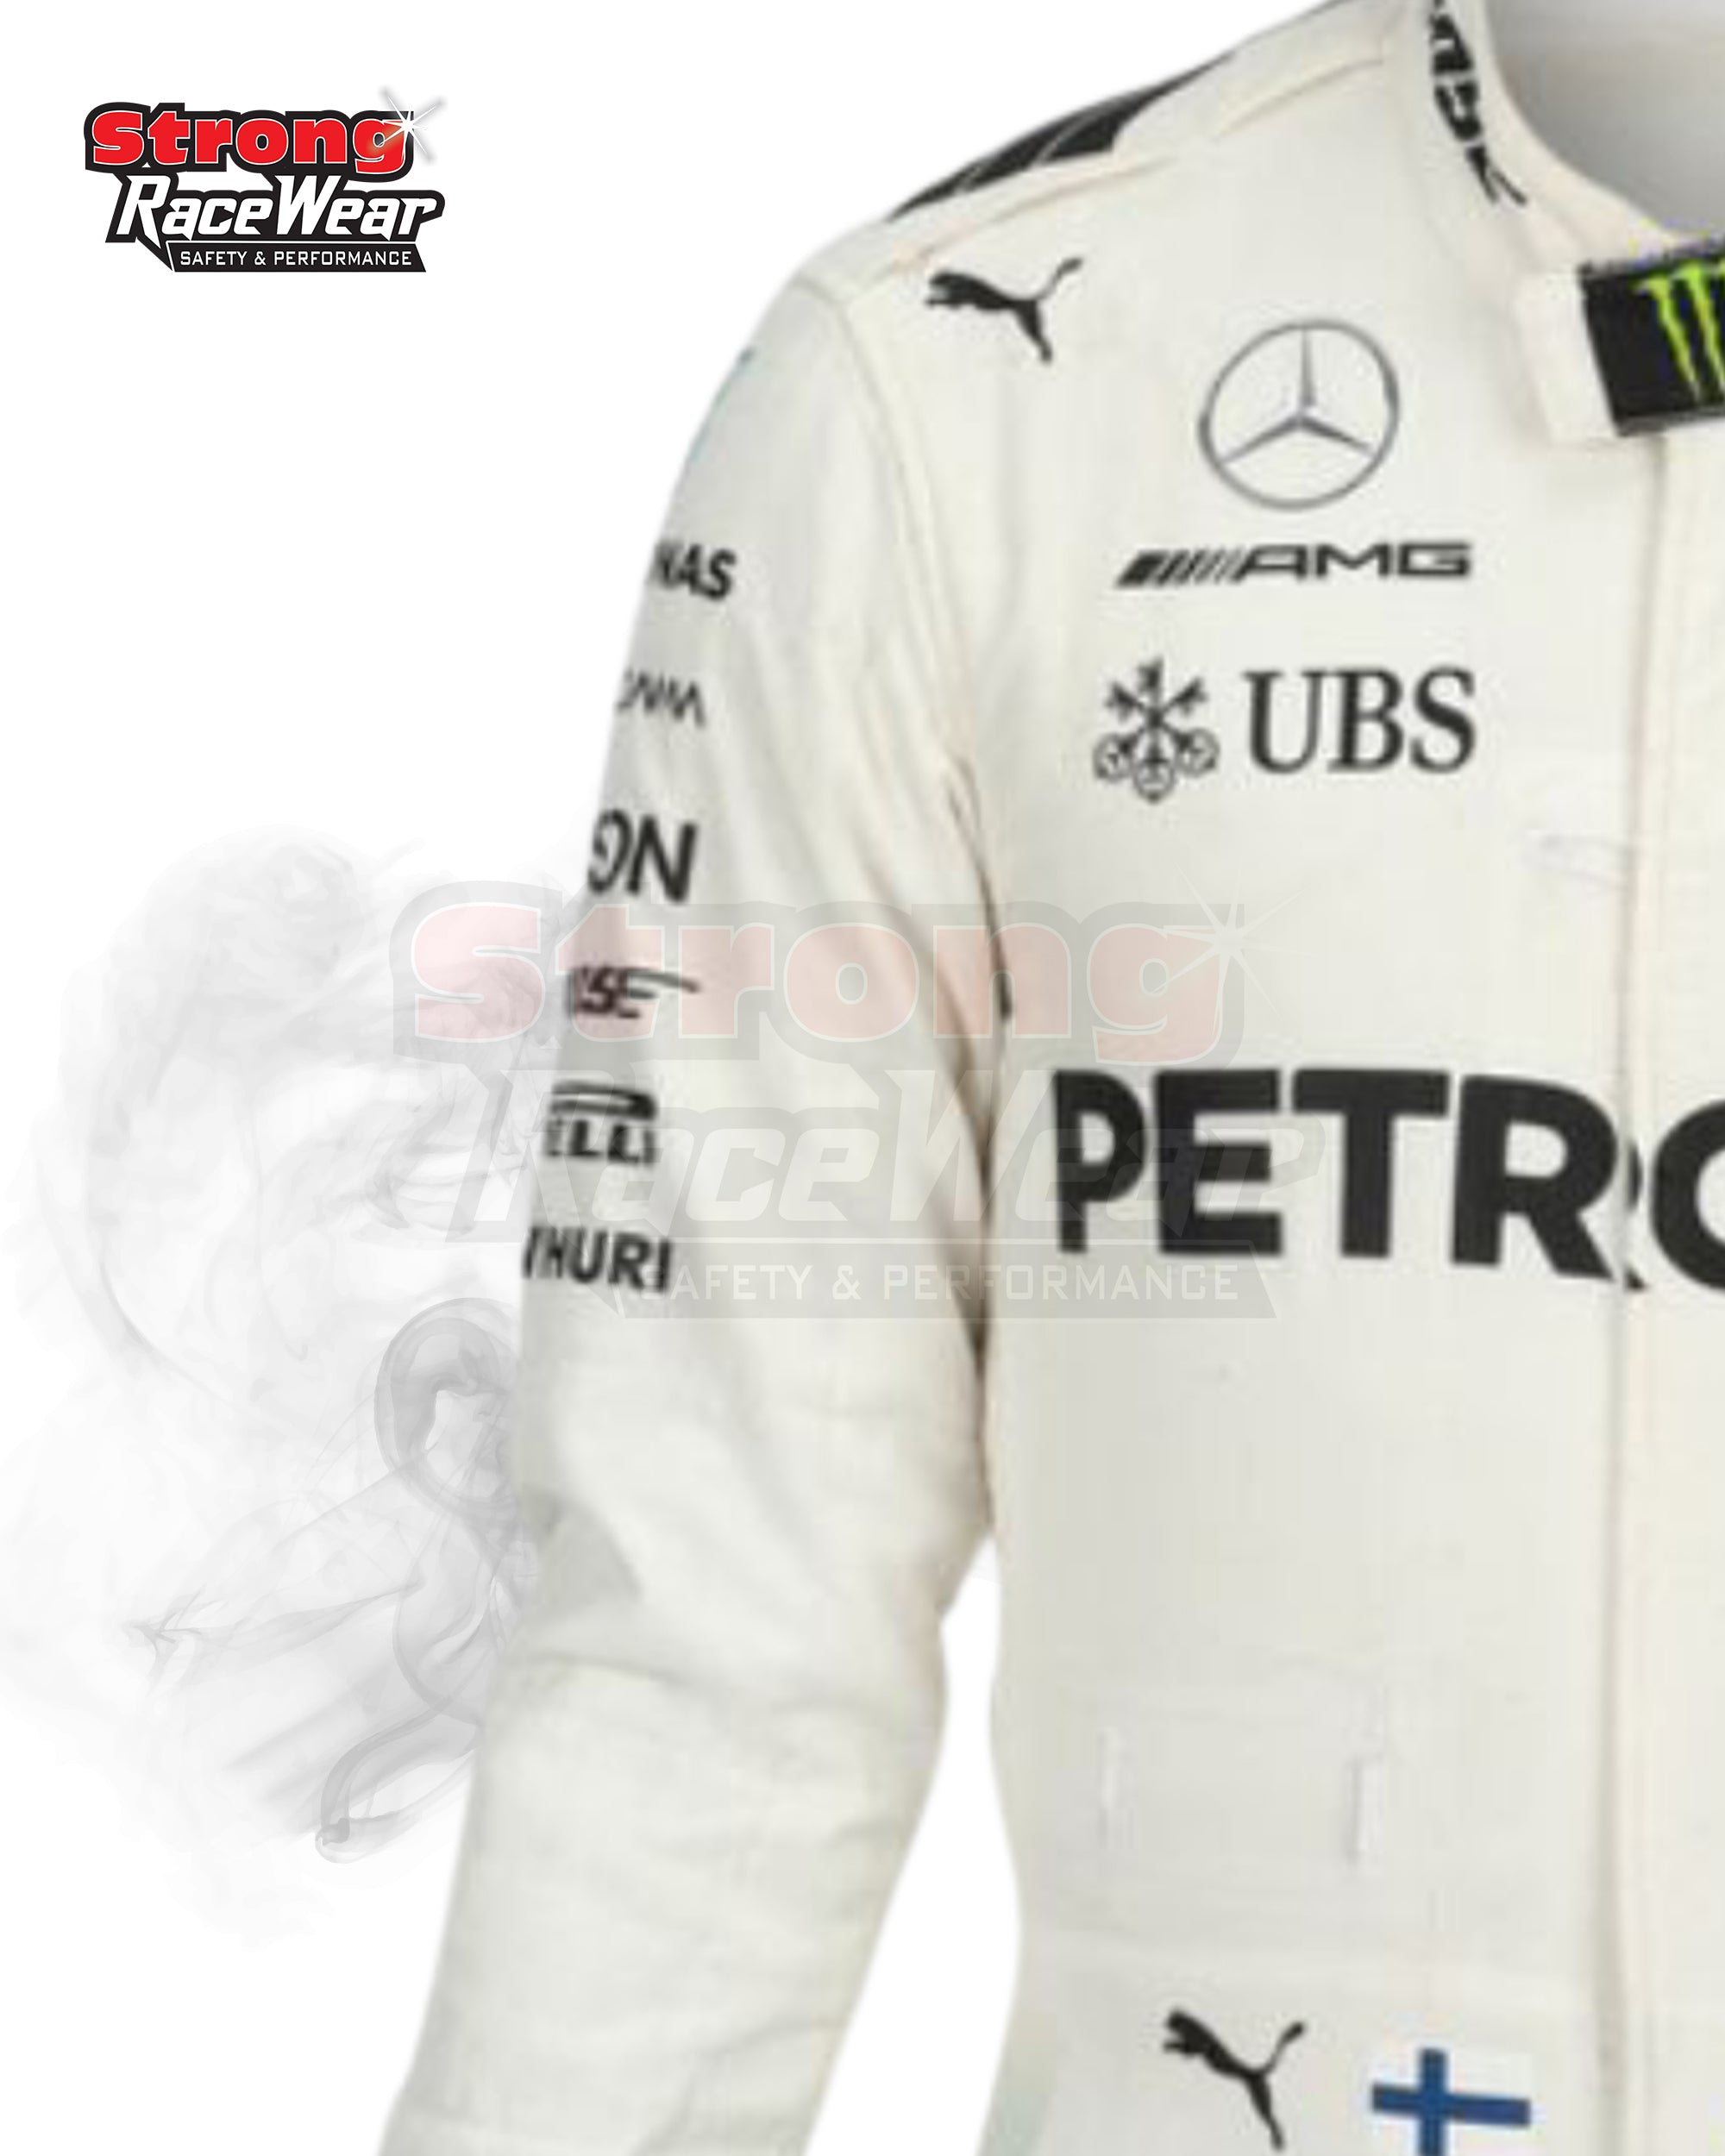 Vallteri Bottas Un-signed 2017 Mercedes-AMG Petronas Race Suit